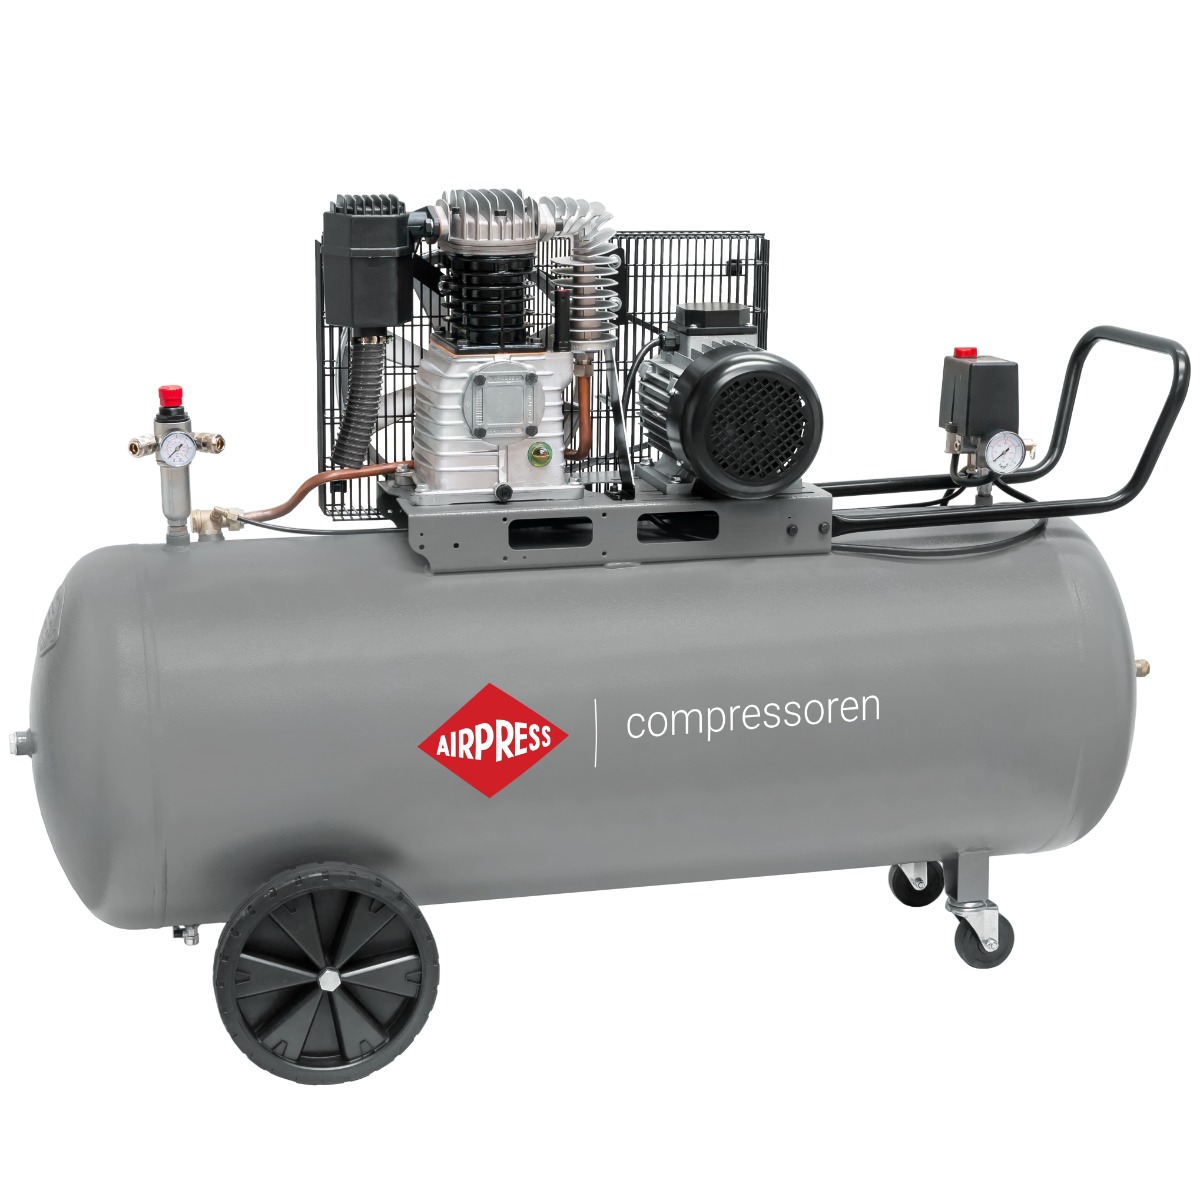 Compresor de aire de una etapa profesional HK 425-200